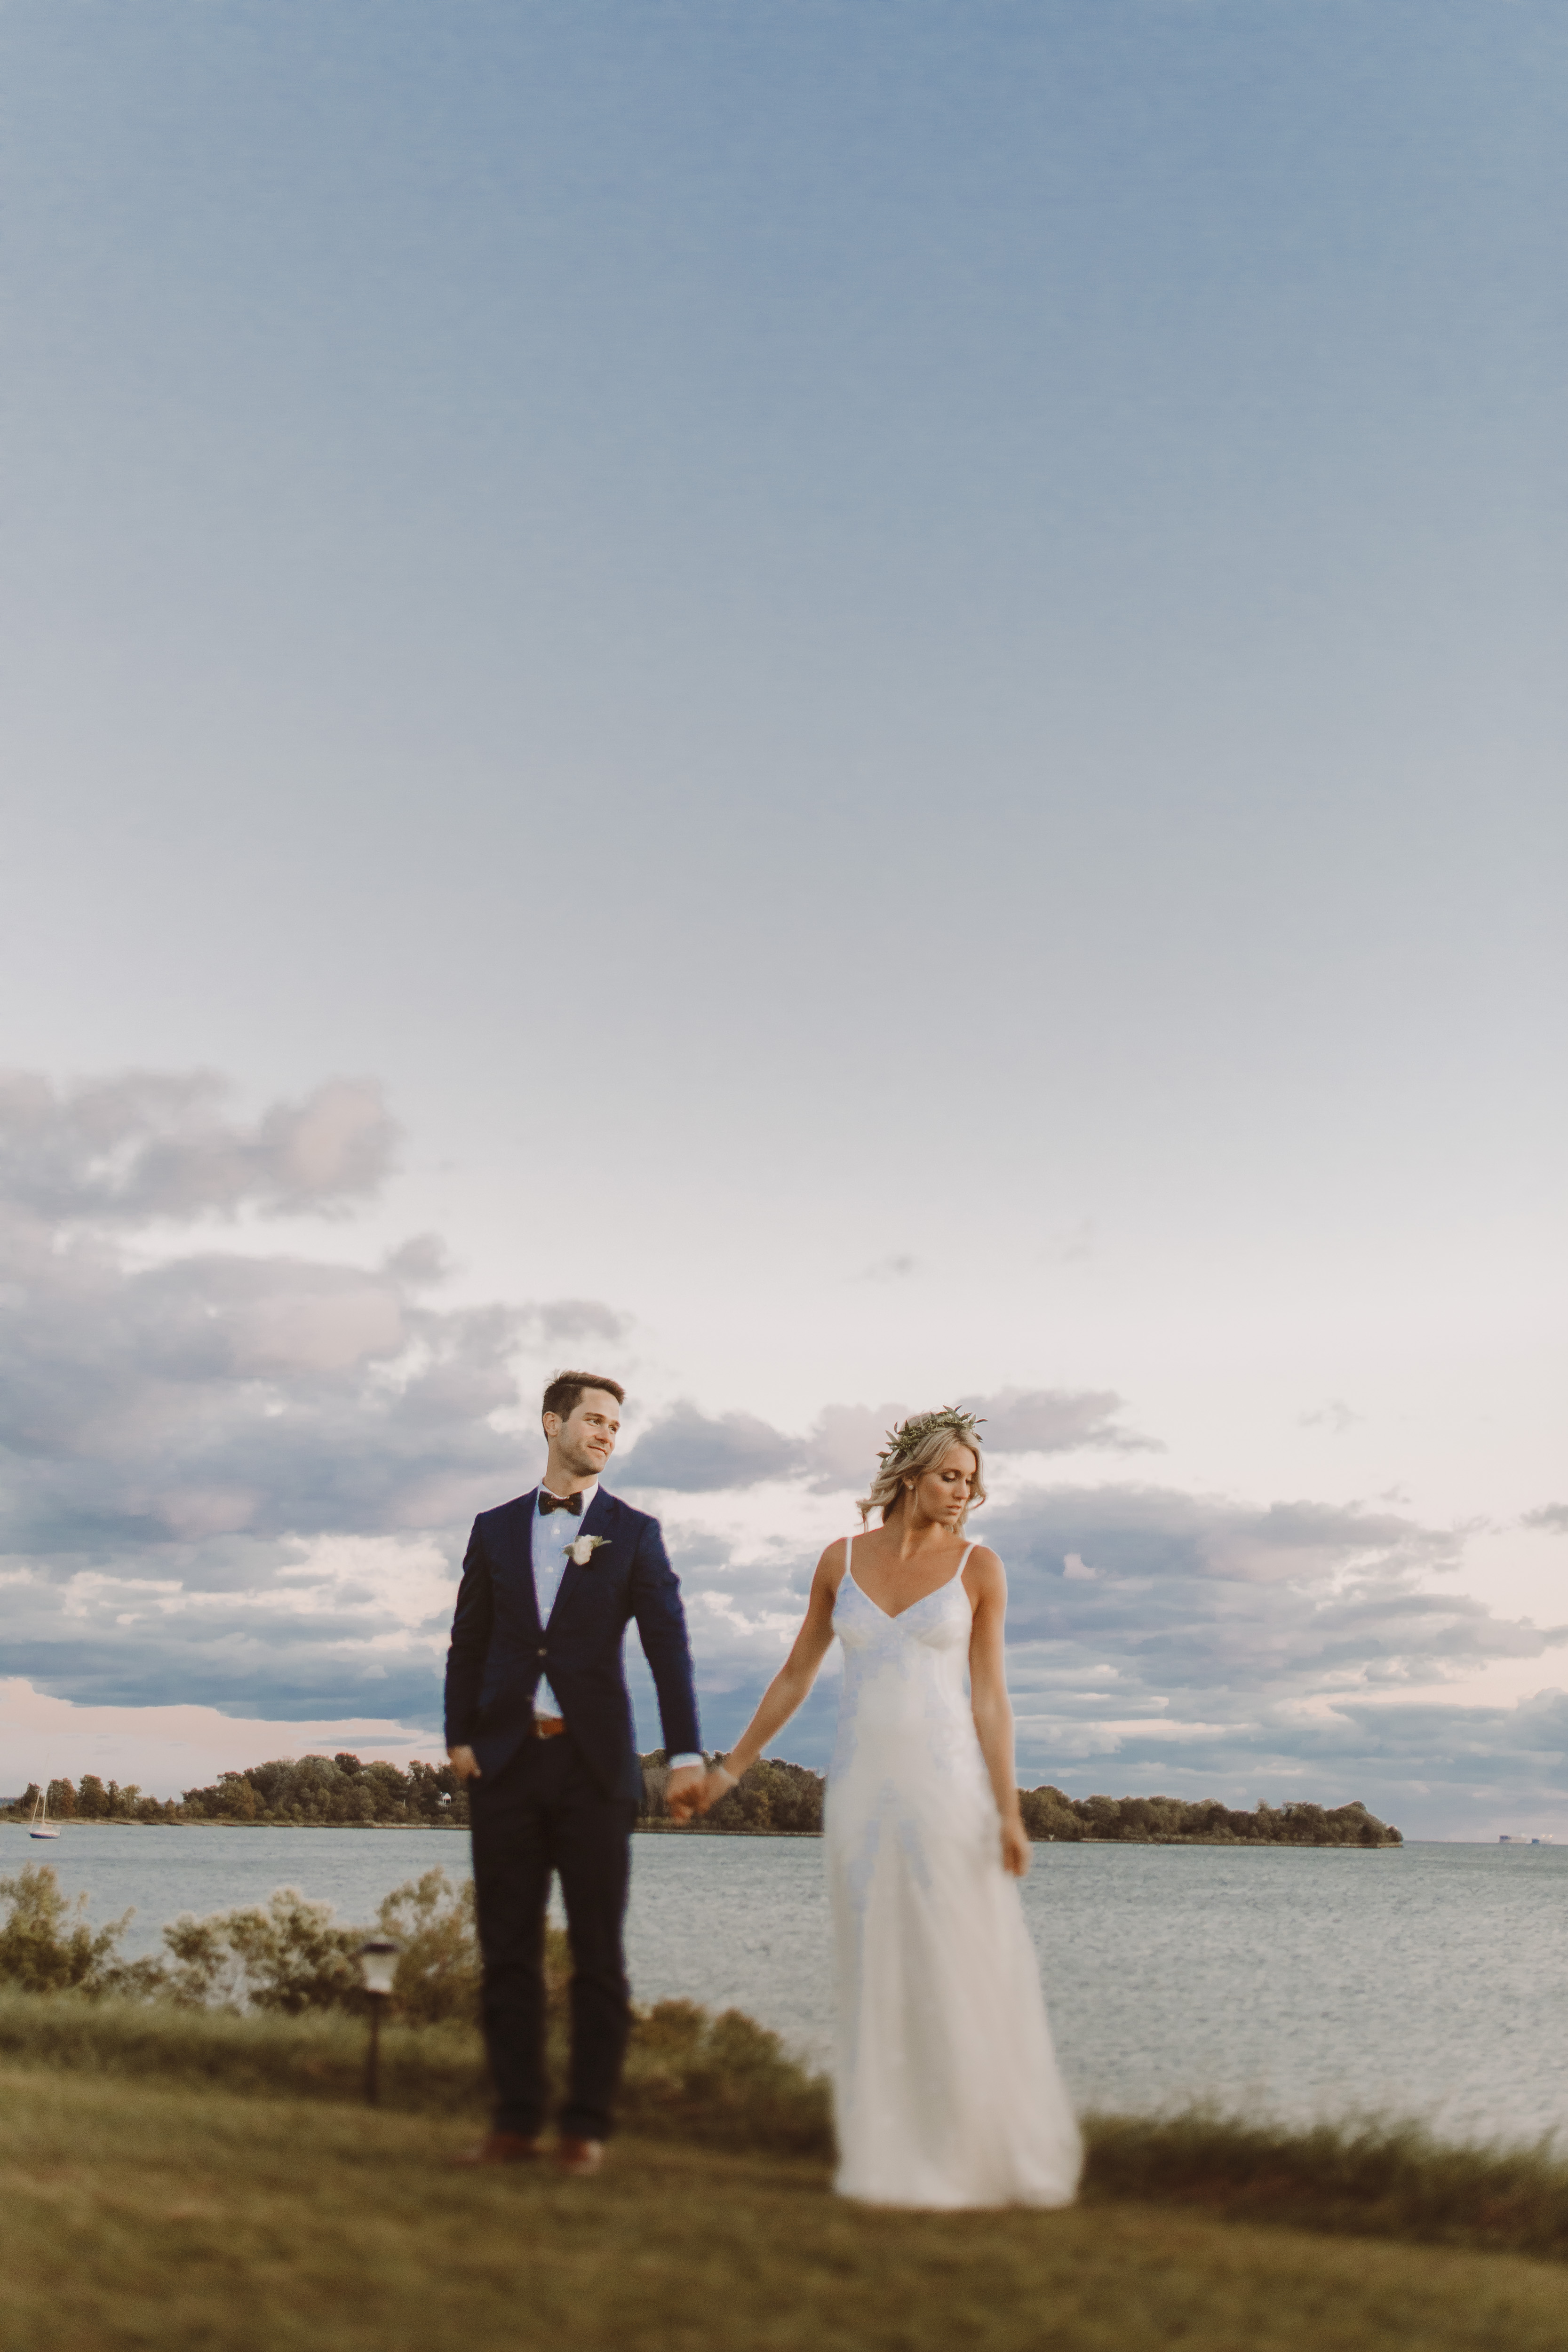 Kristen & Jake's beautiful wedding at Annapolis waterfront wedding venue - Whitehall